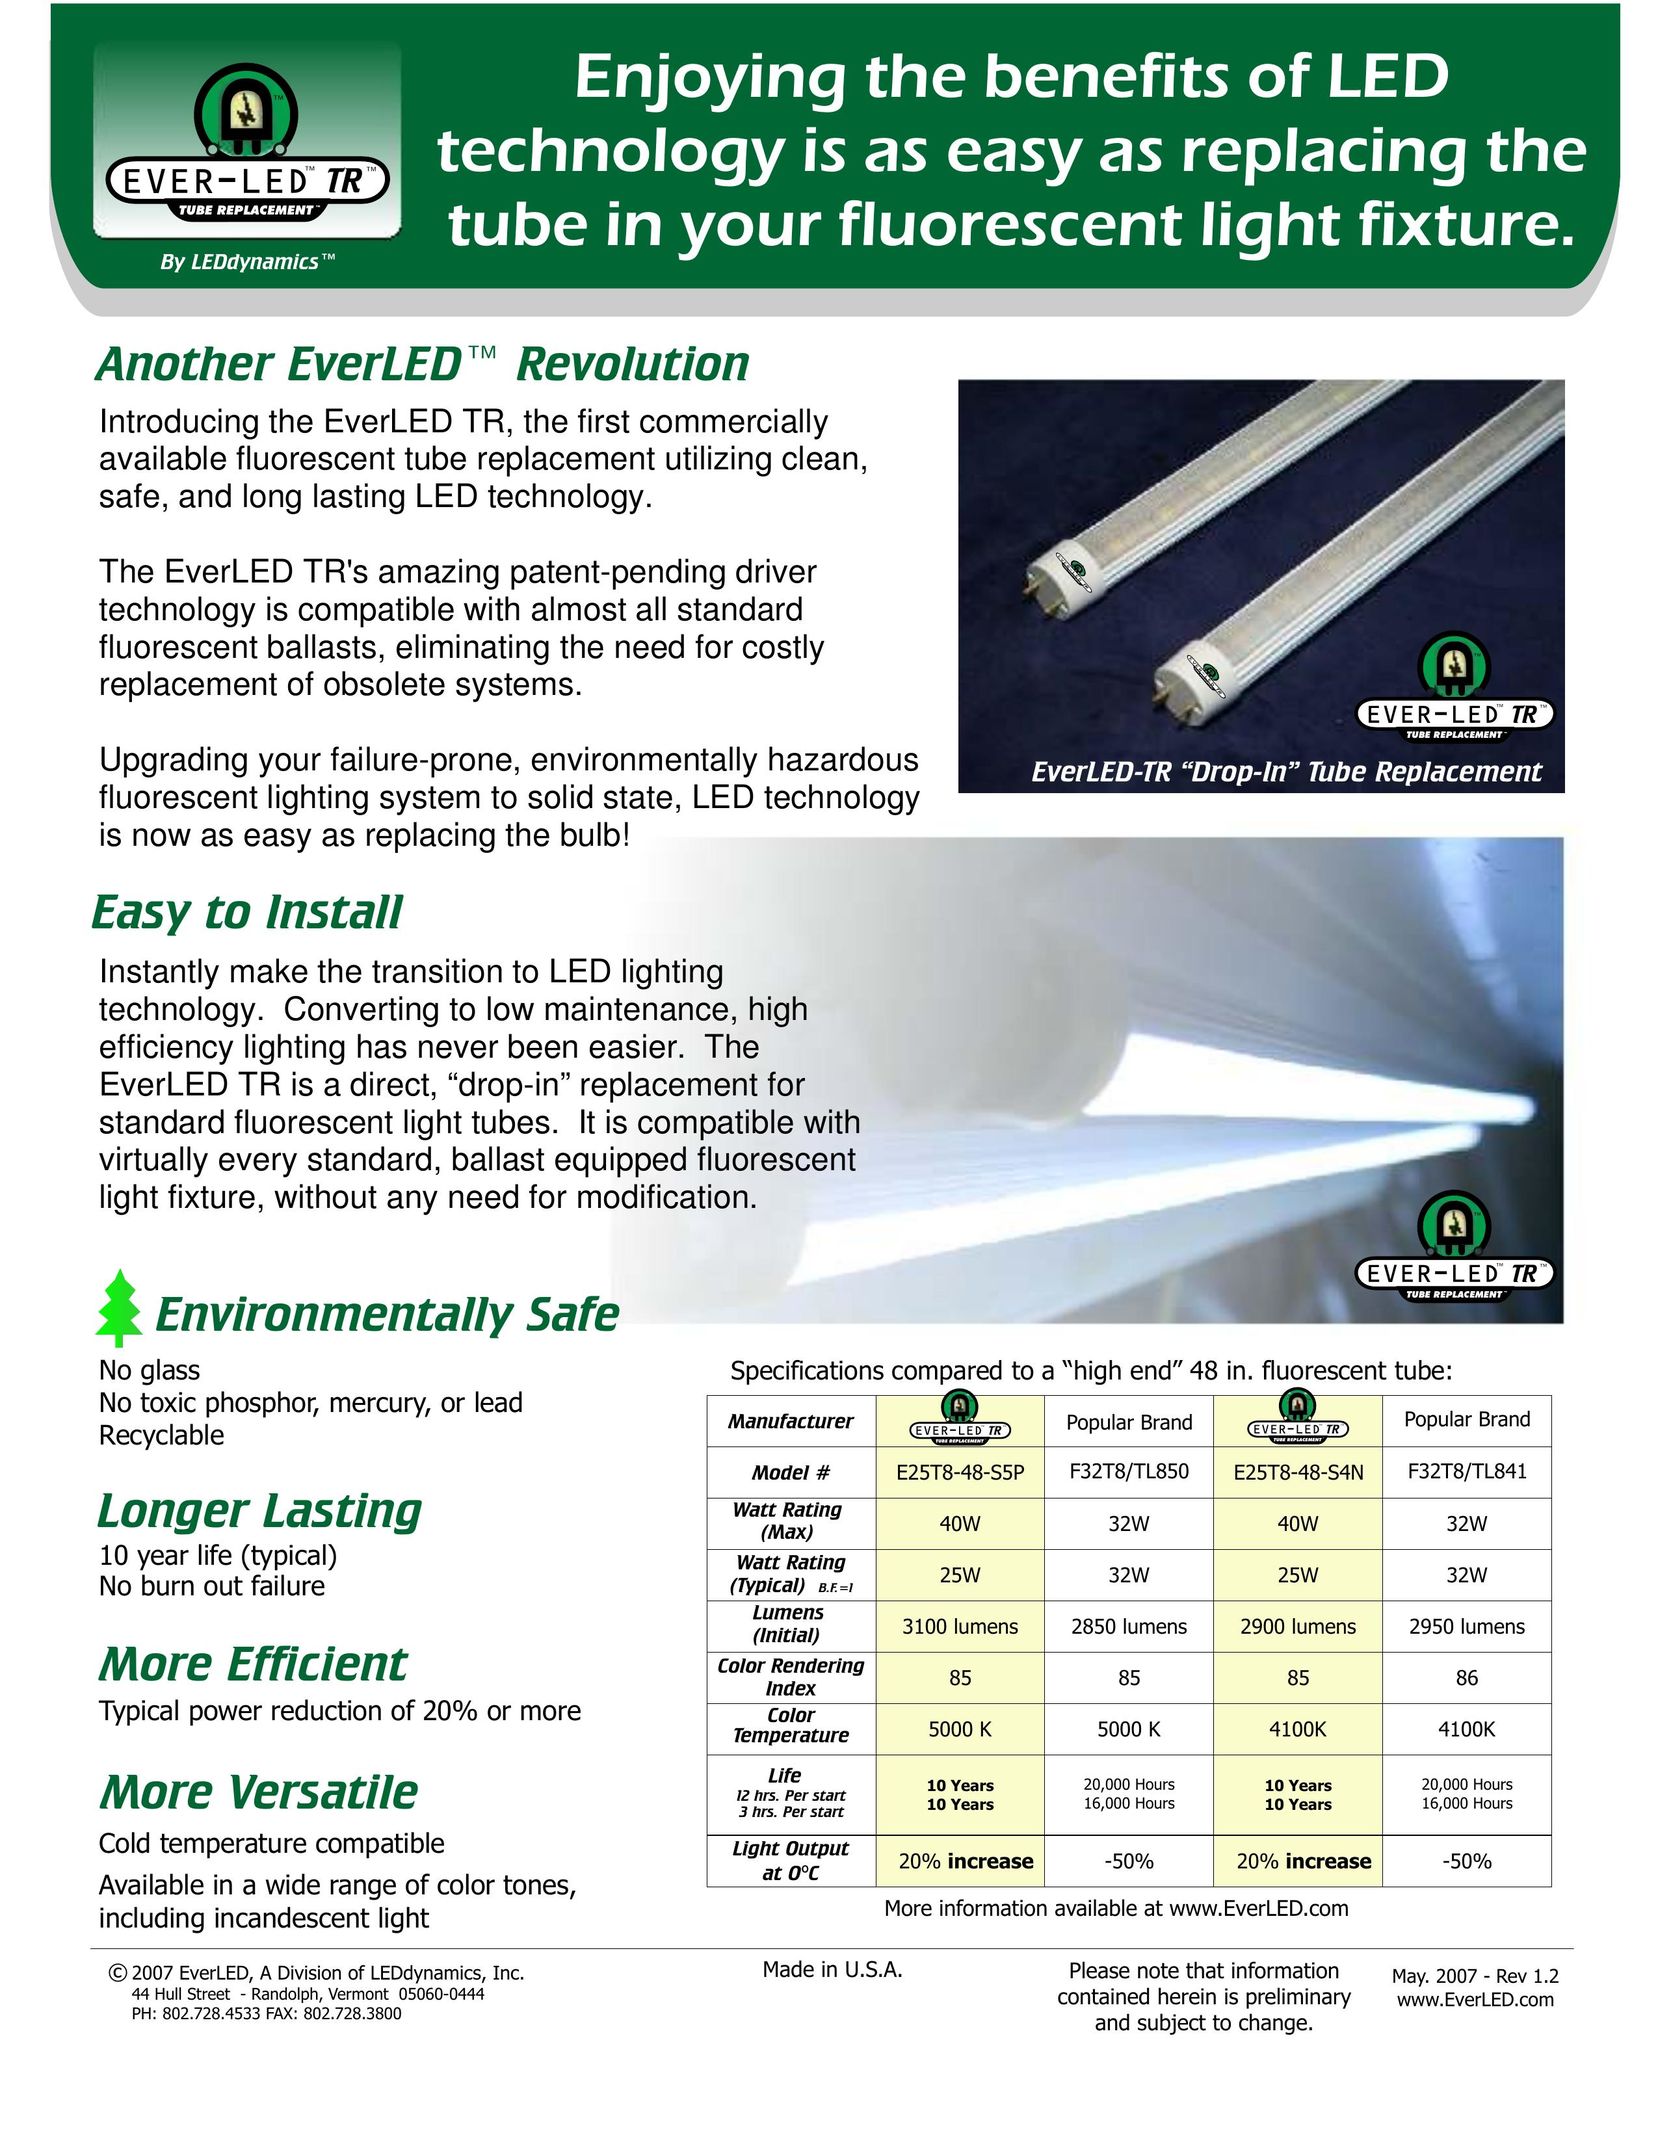 Luxeon E2528-48-S4N Indoor Furnishings User Manual